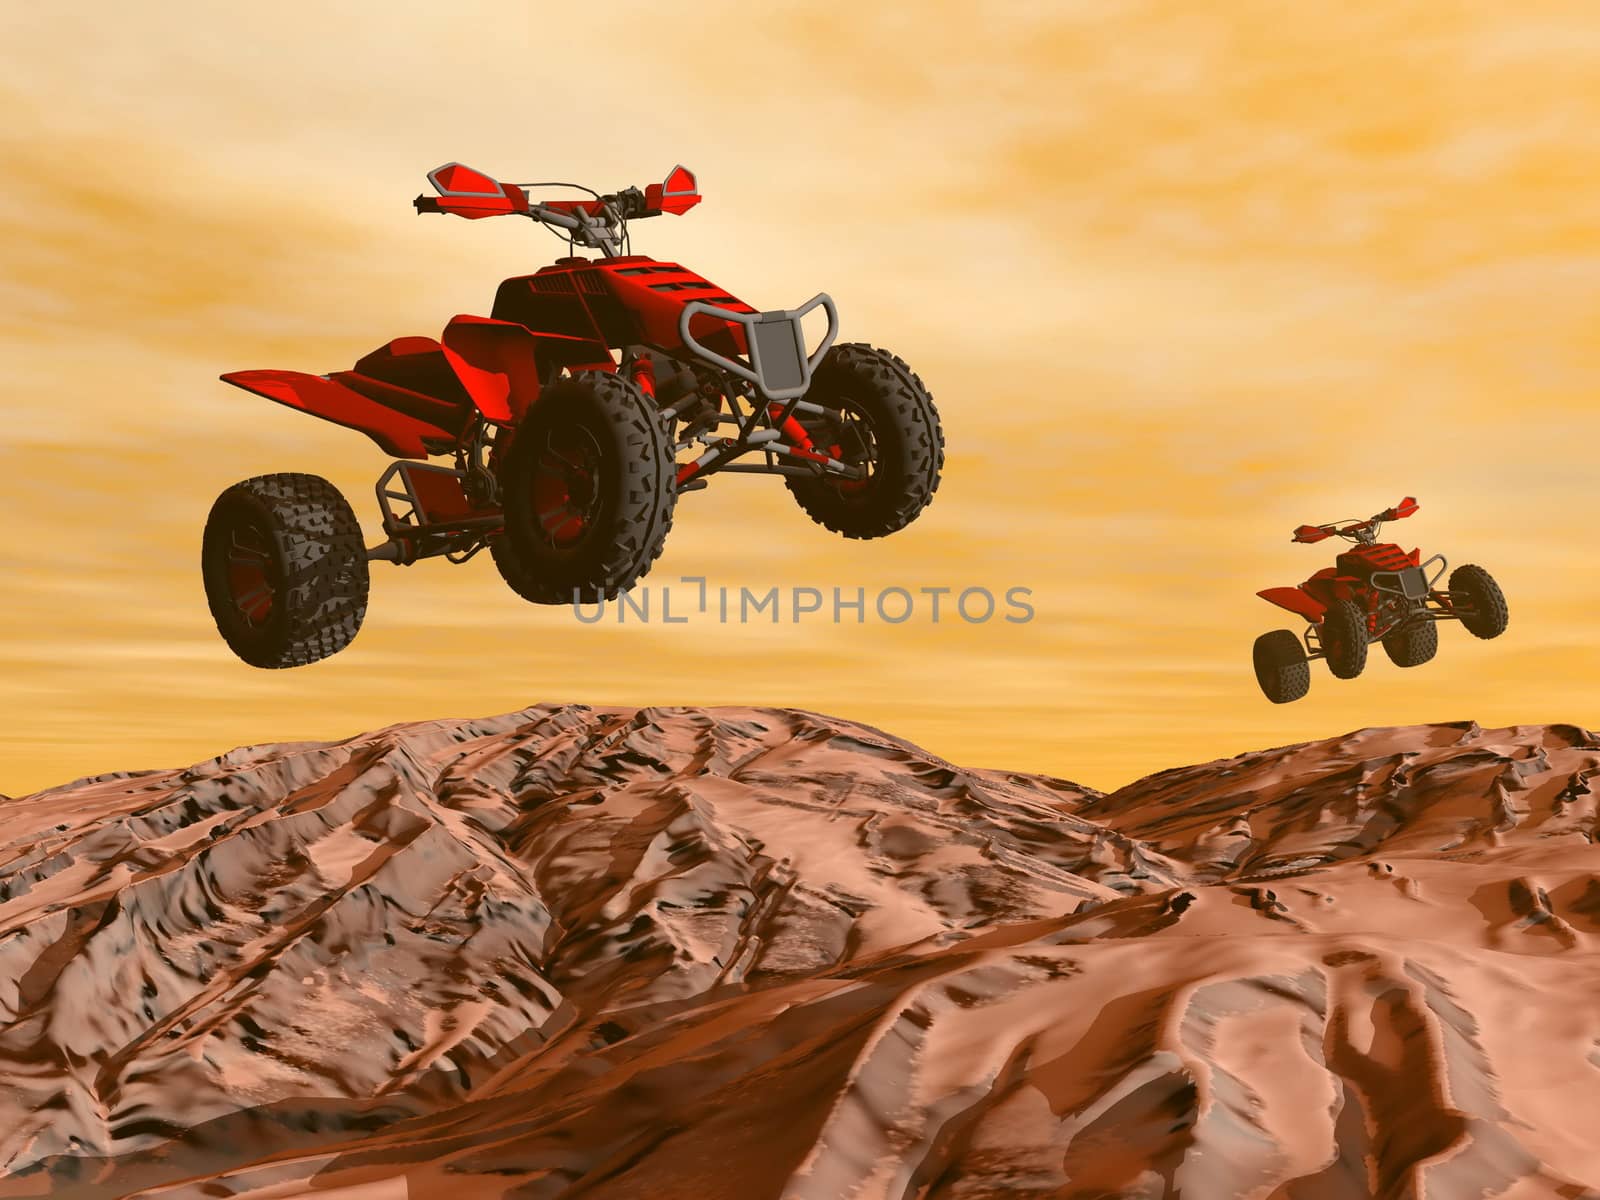 Quads in the desert - 3D render by Elenaphotos21